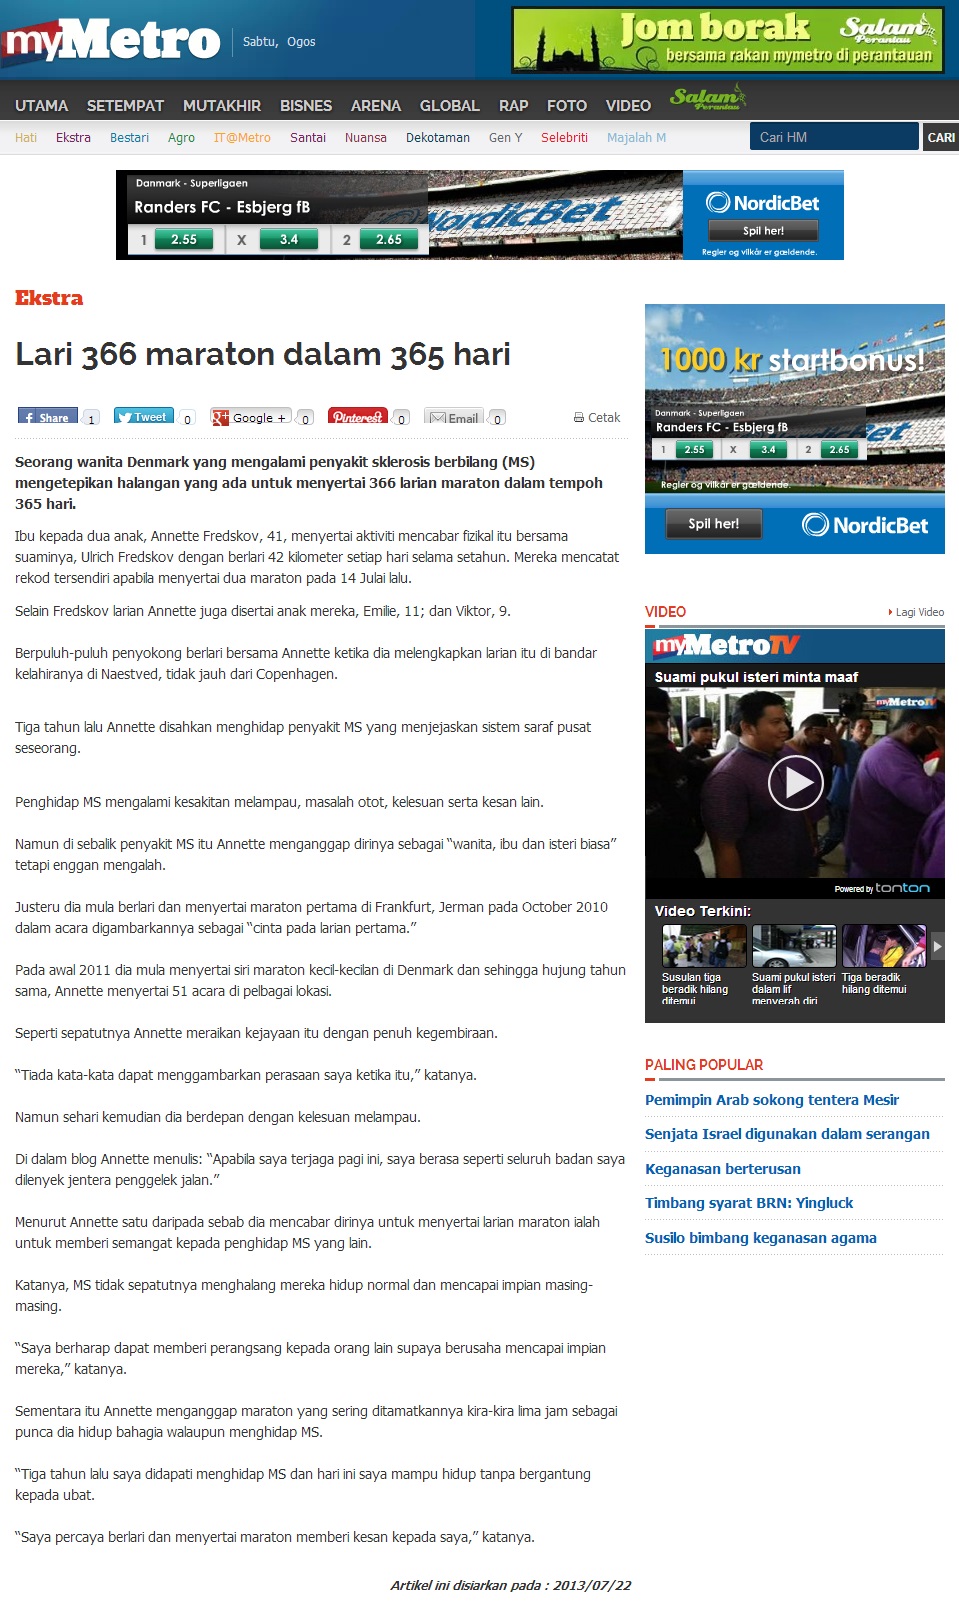 hmetro.com.my 2013.07.22 malaysisk